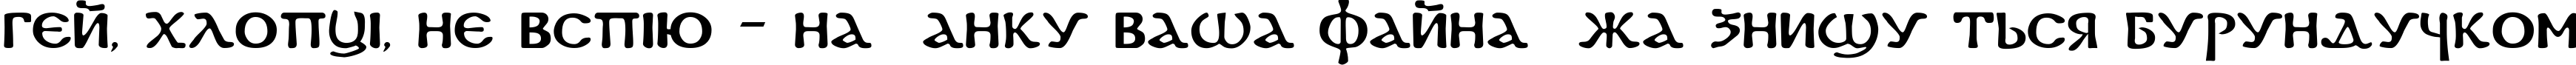 Пример написания шрифтом DS Coptic текста на украинском